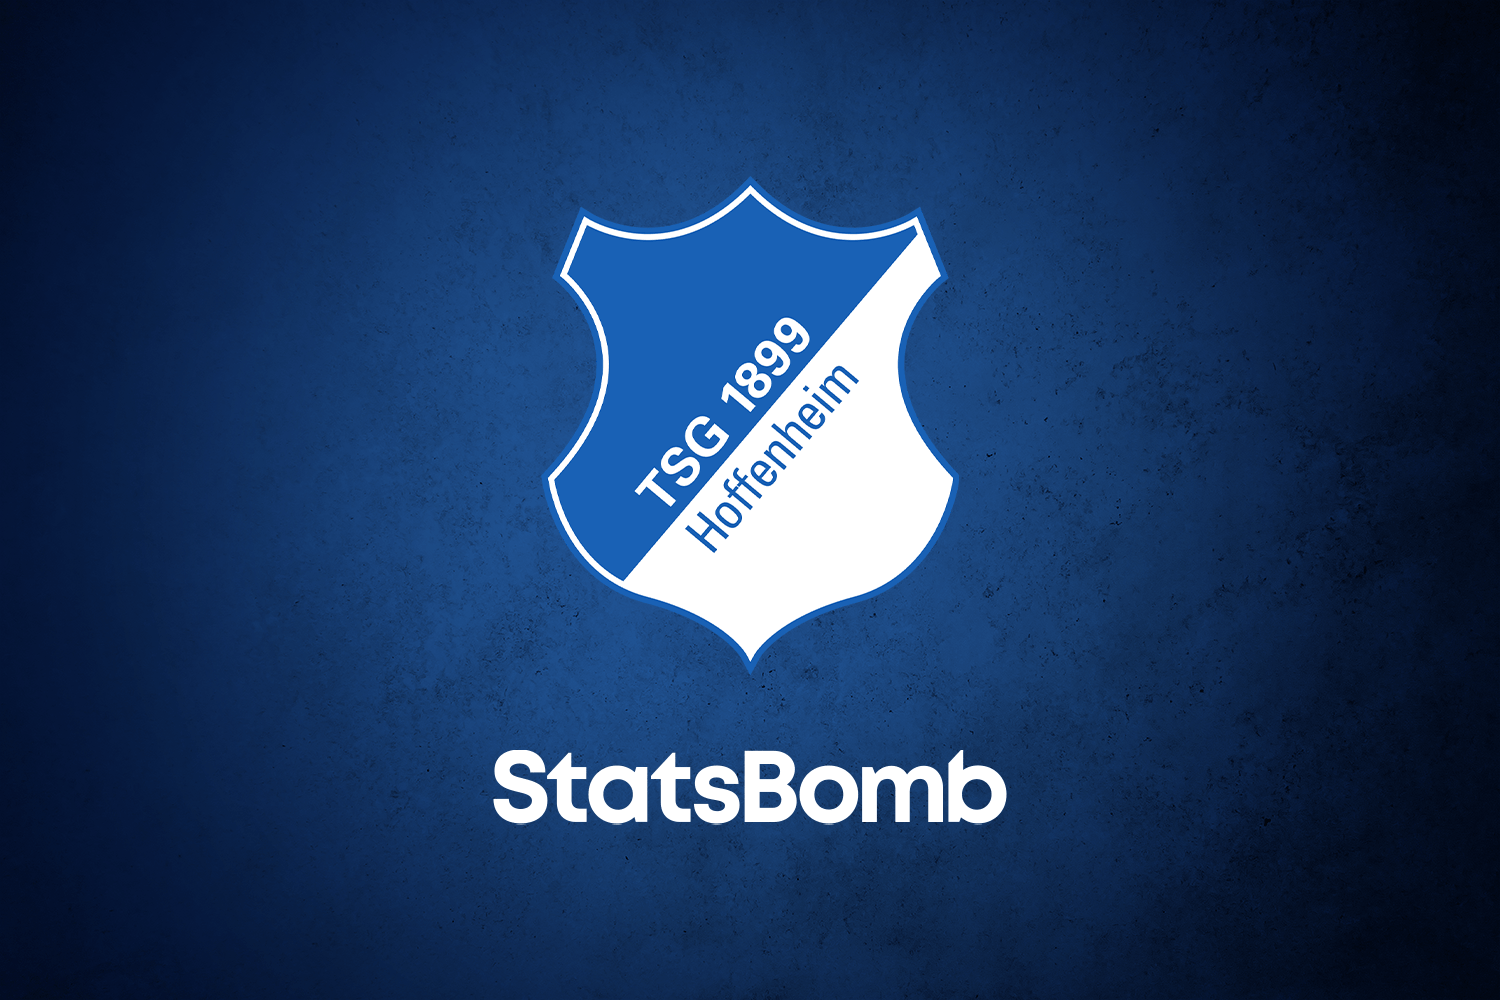 StatsBomb Sign Partnership With TSG 1899 Hoffenheim Frauen